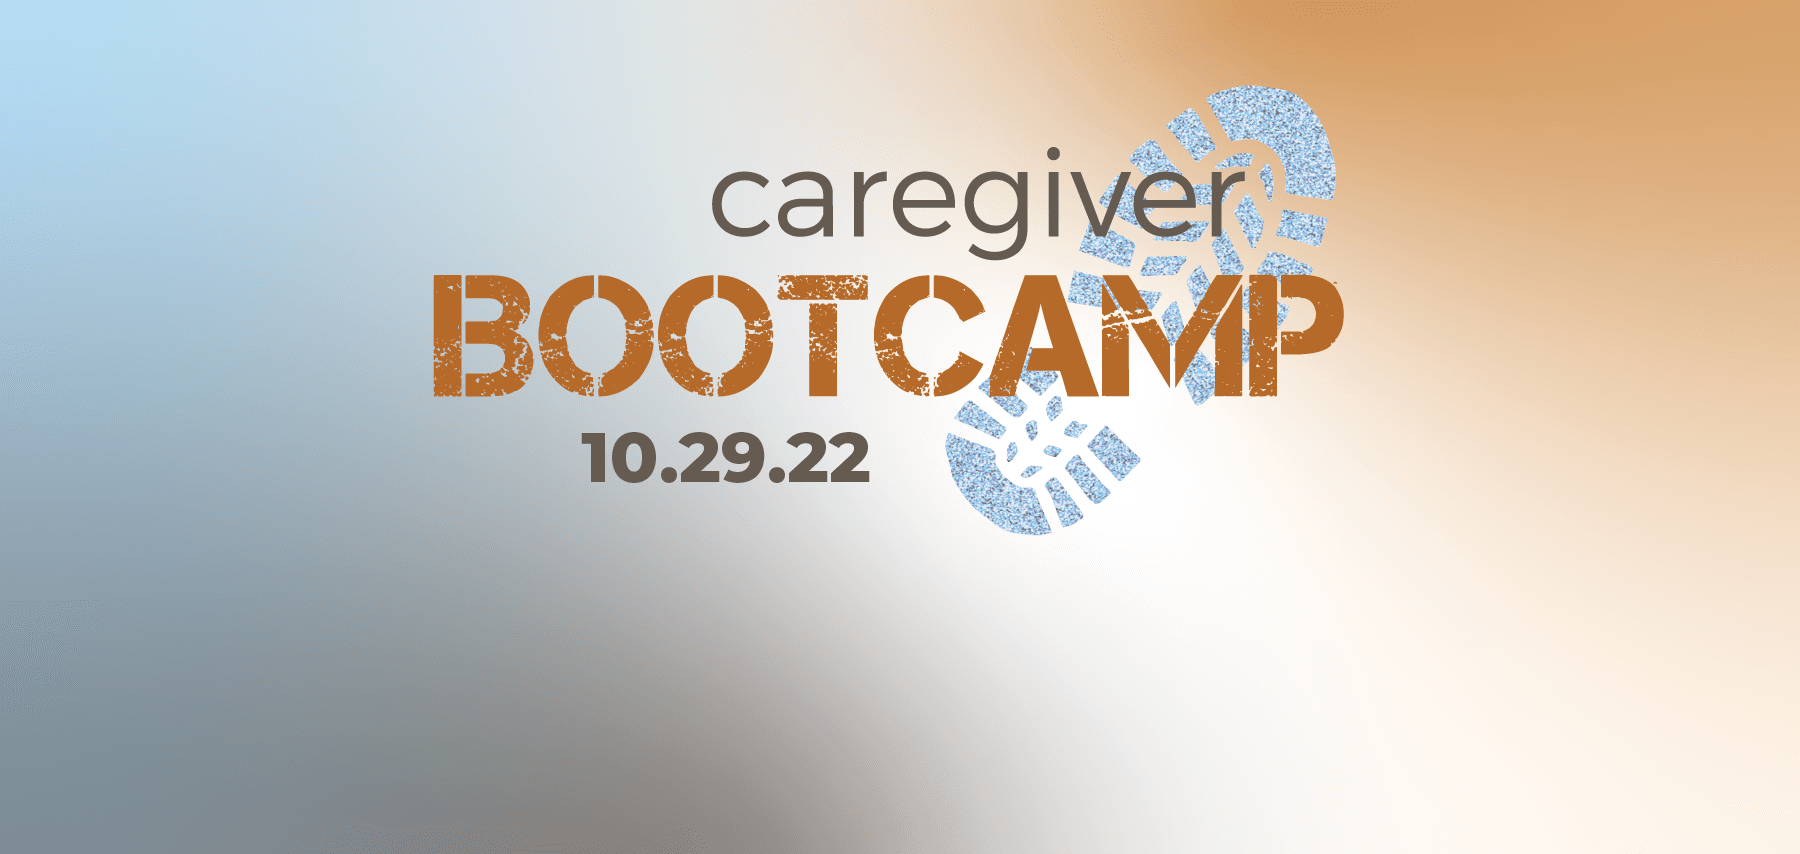 Caregiver Bootcamp